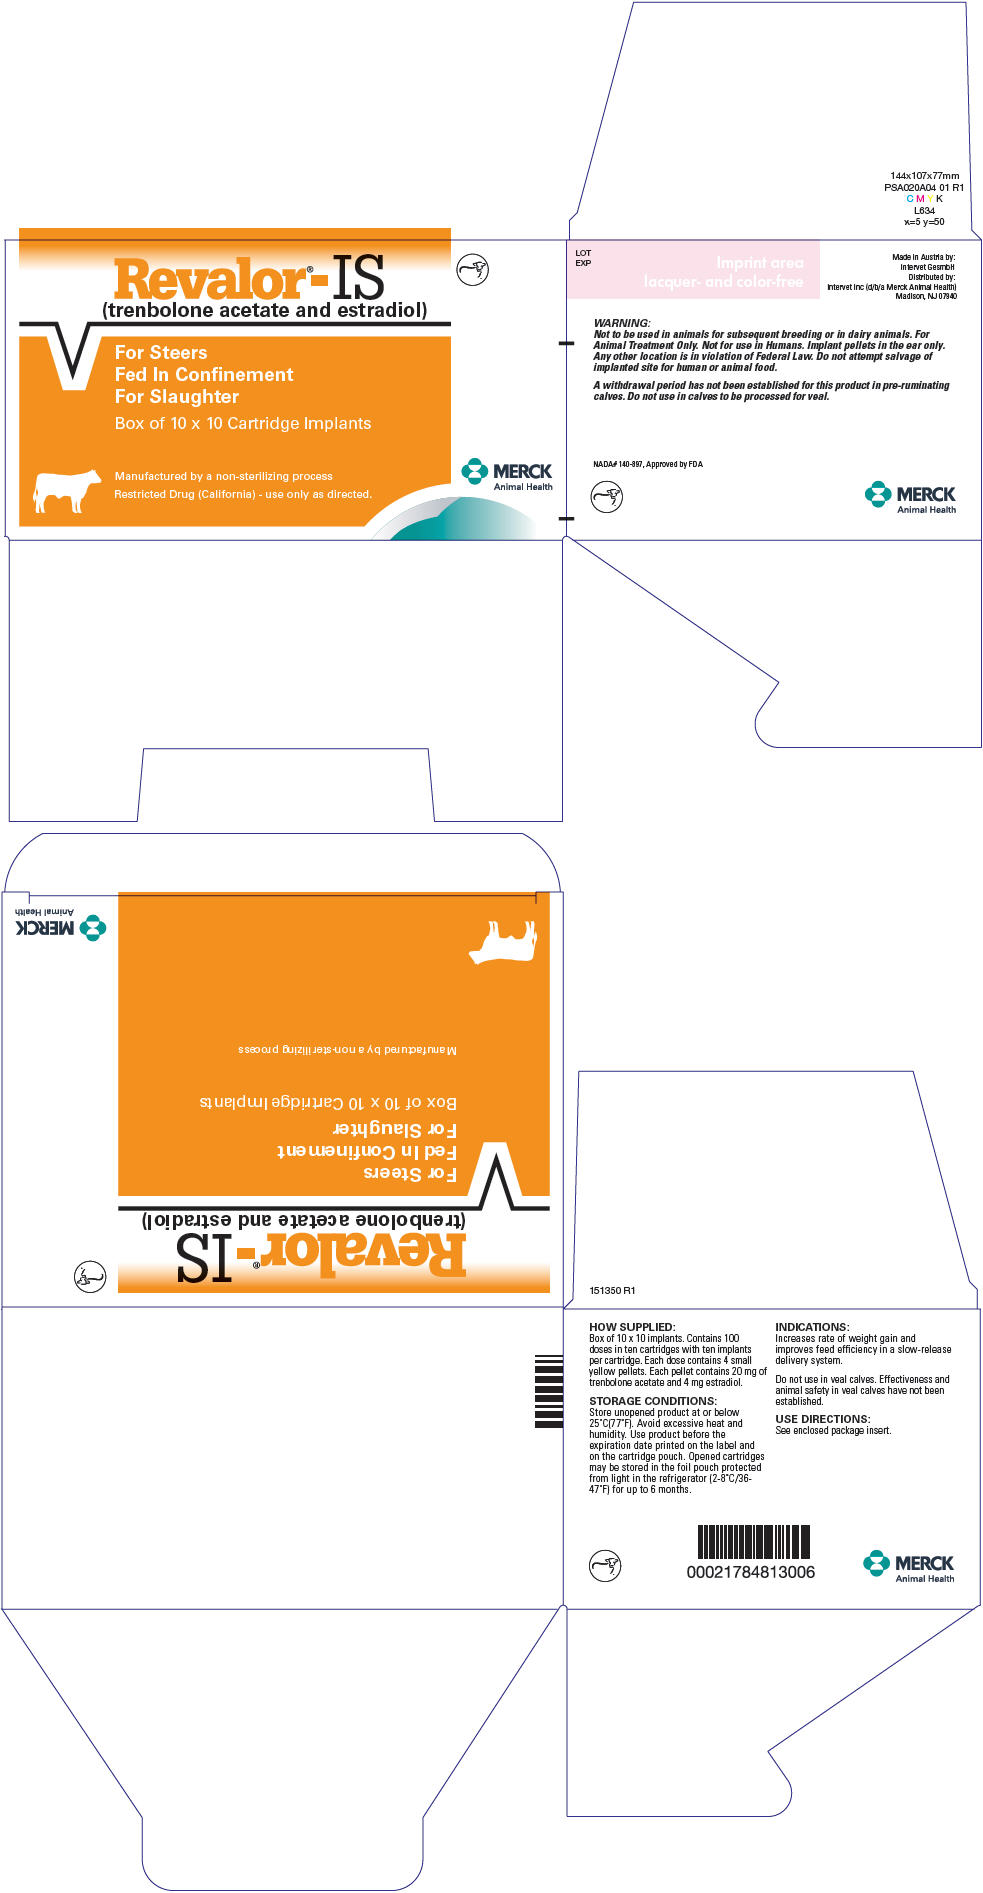 PRINCIPAL DISPLAY PANEL - 10 x 10 Cartridge Implant Box